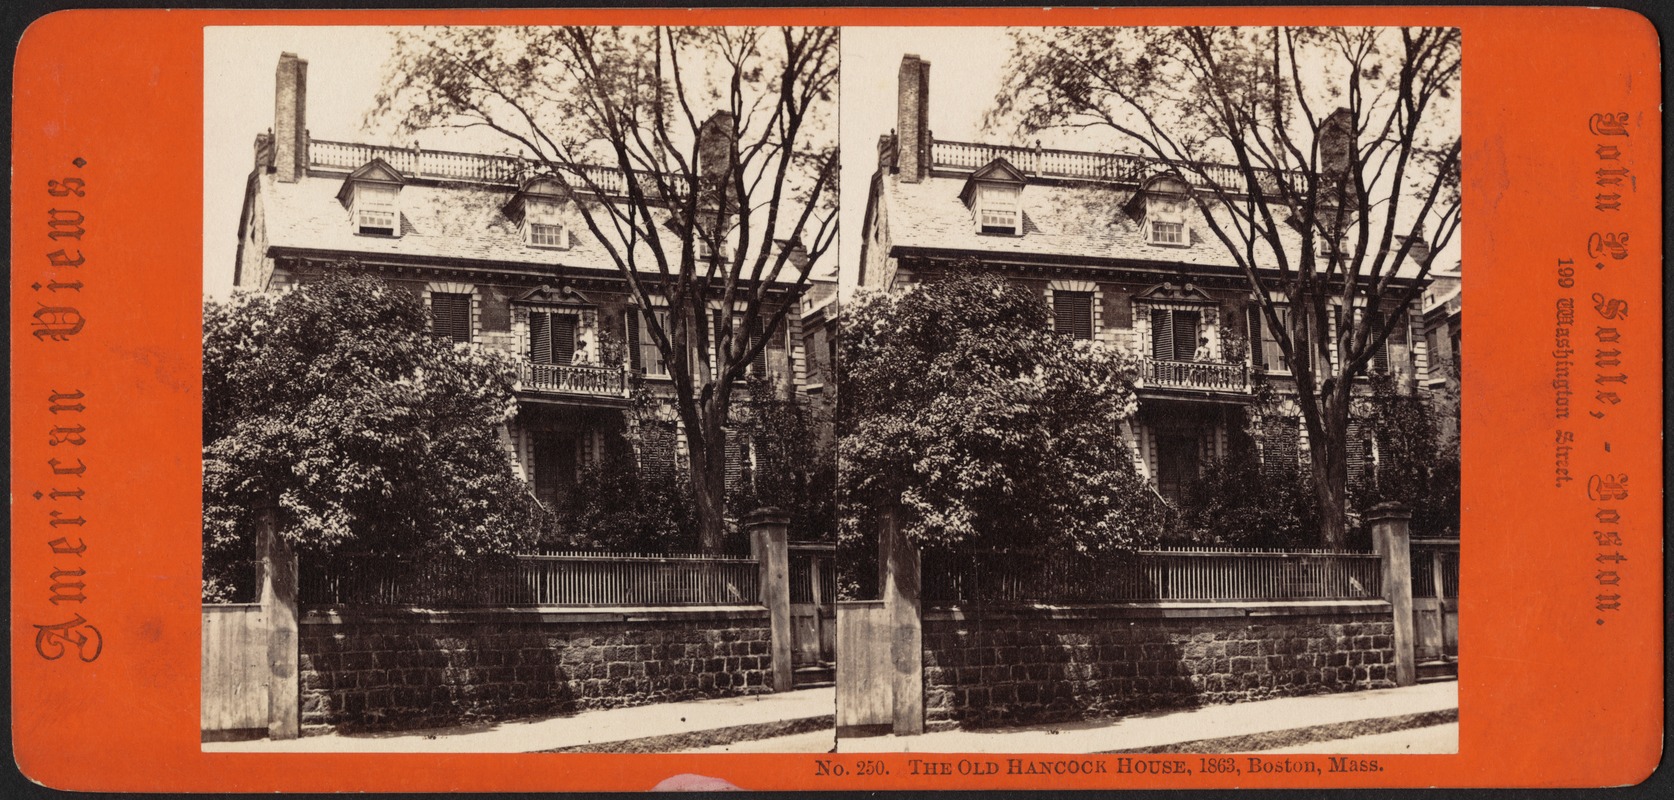 The old Hancock House, 1863, Boston, Mass.